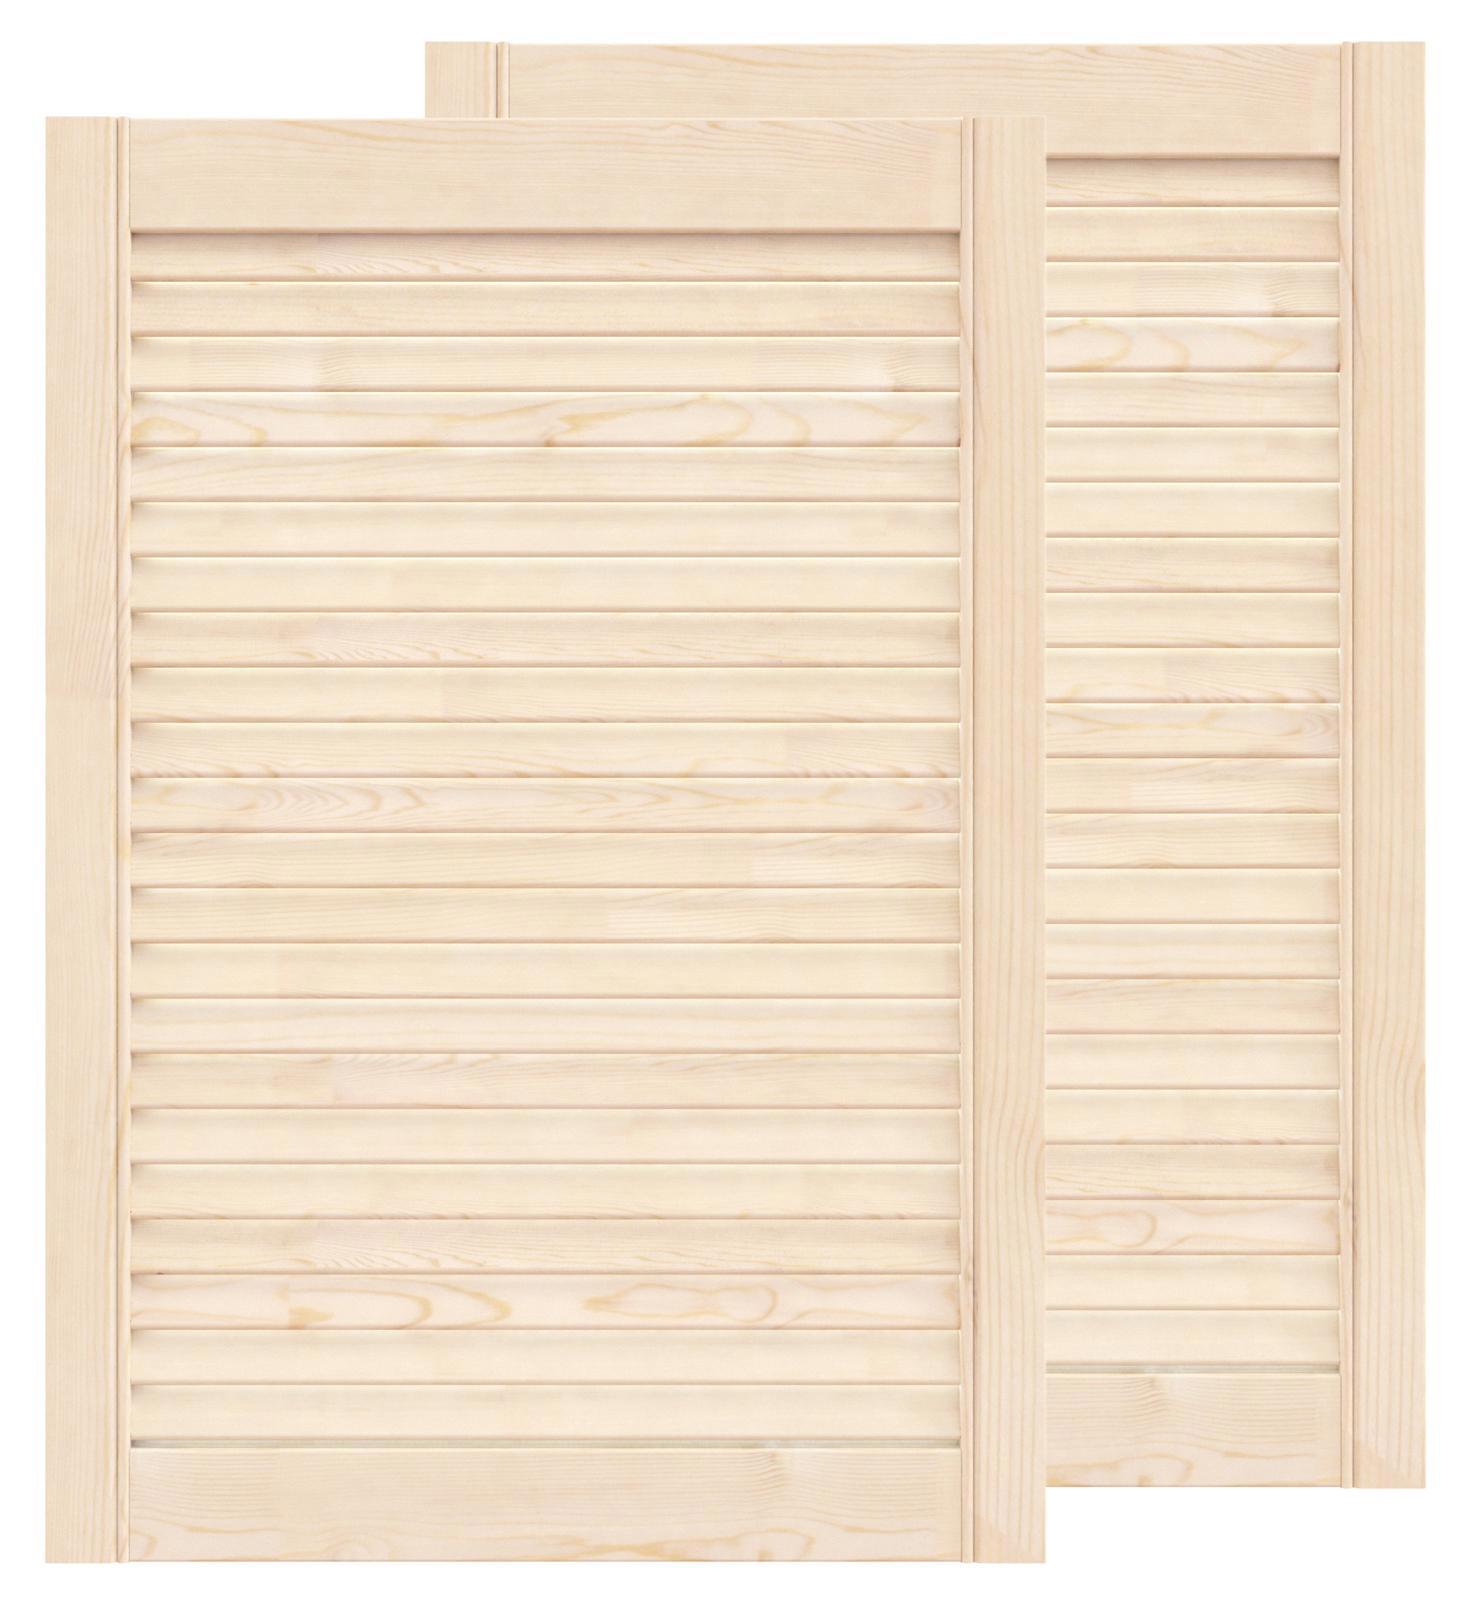 90289118 Двери жалюзийные деревянные 715х494х20мм сосна Экстра комплект из 2-х шт STLM-0170416 TIMBER&STYLE